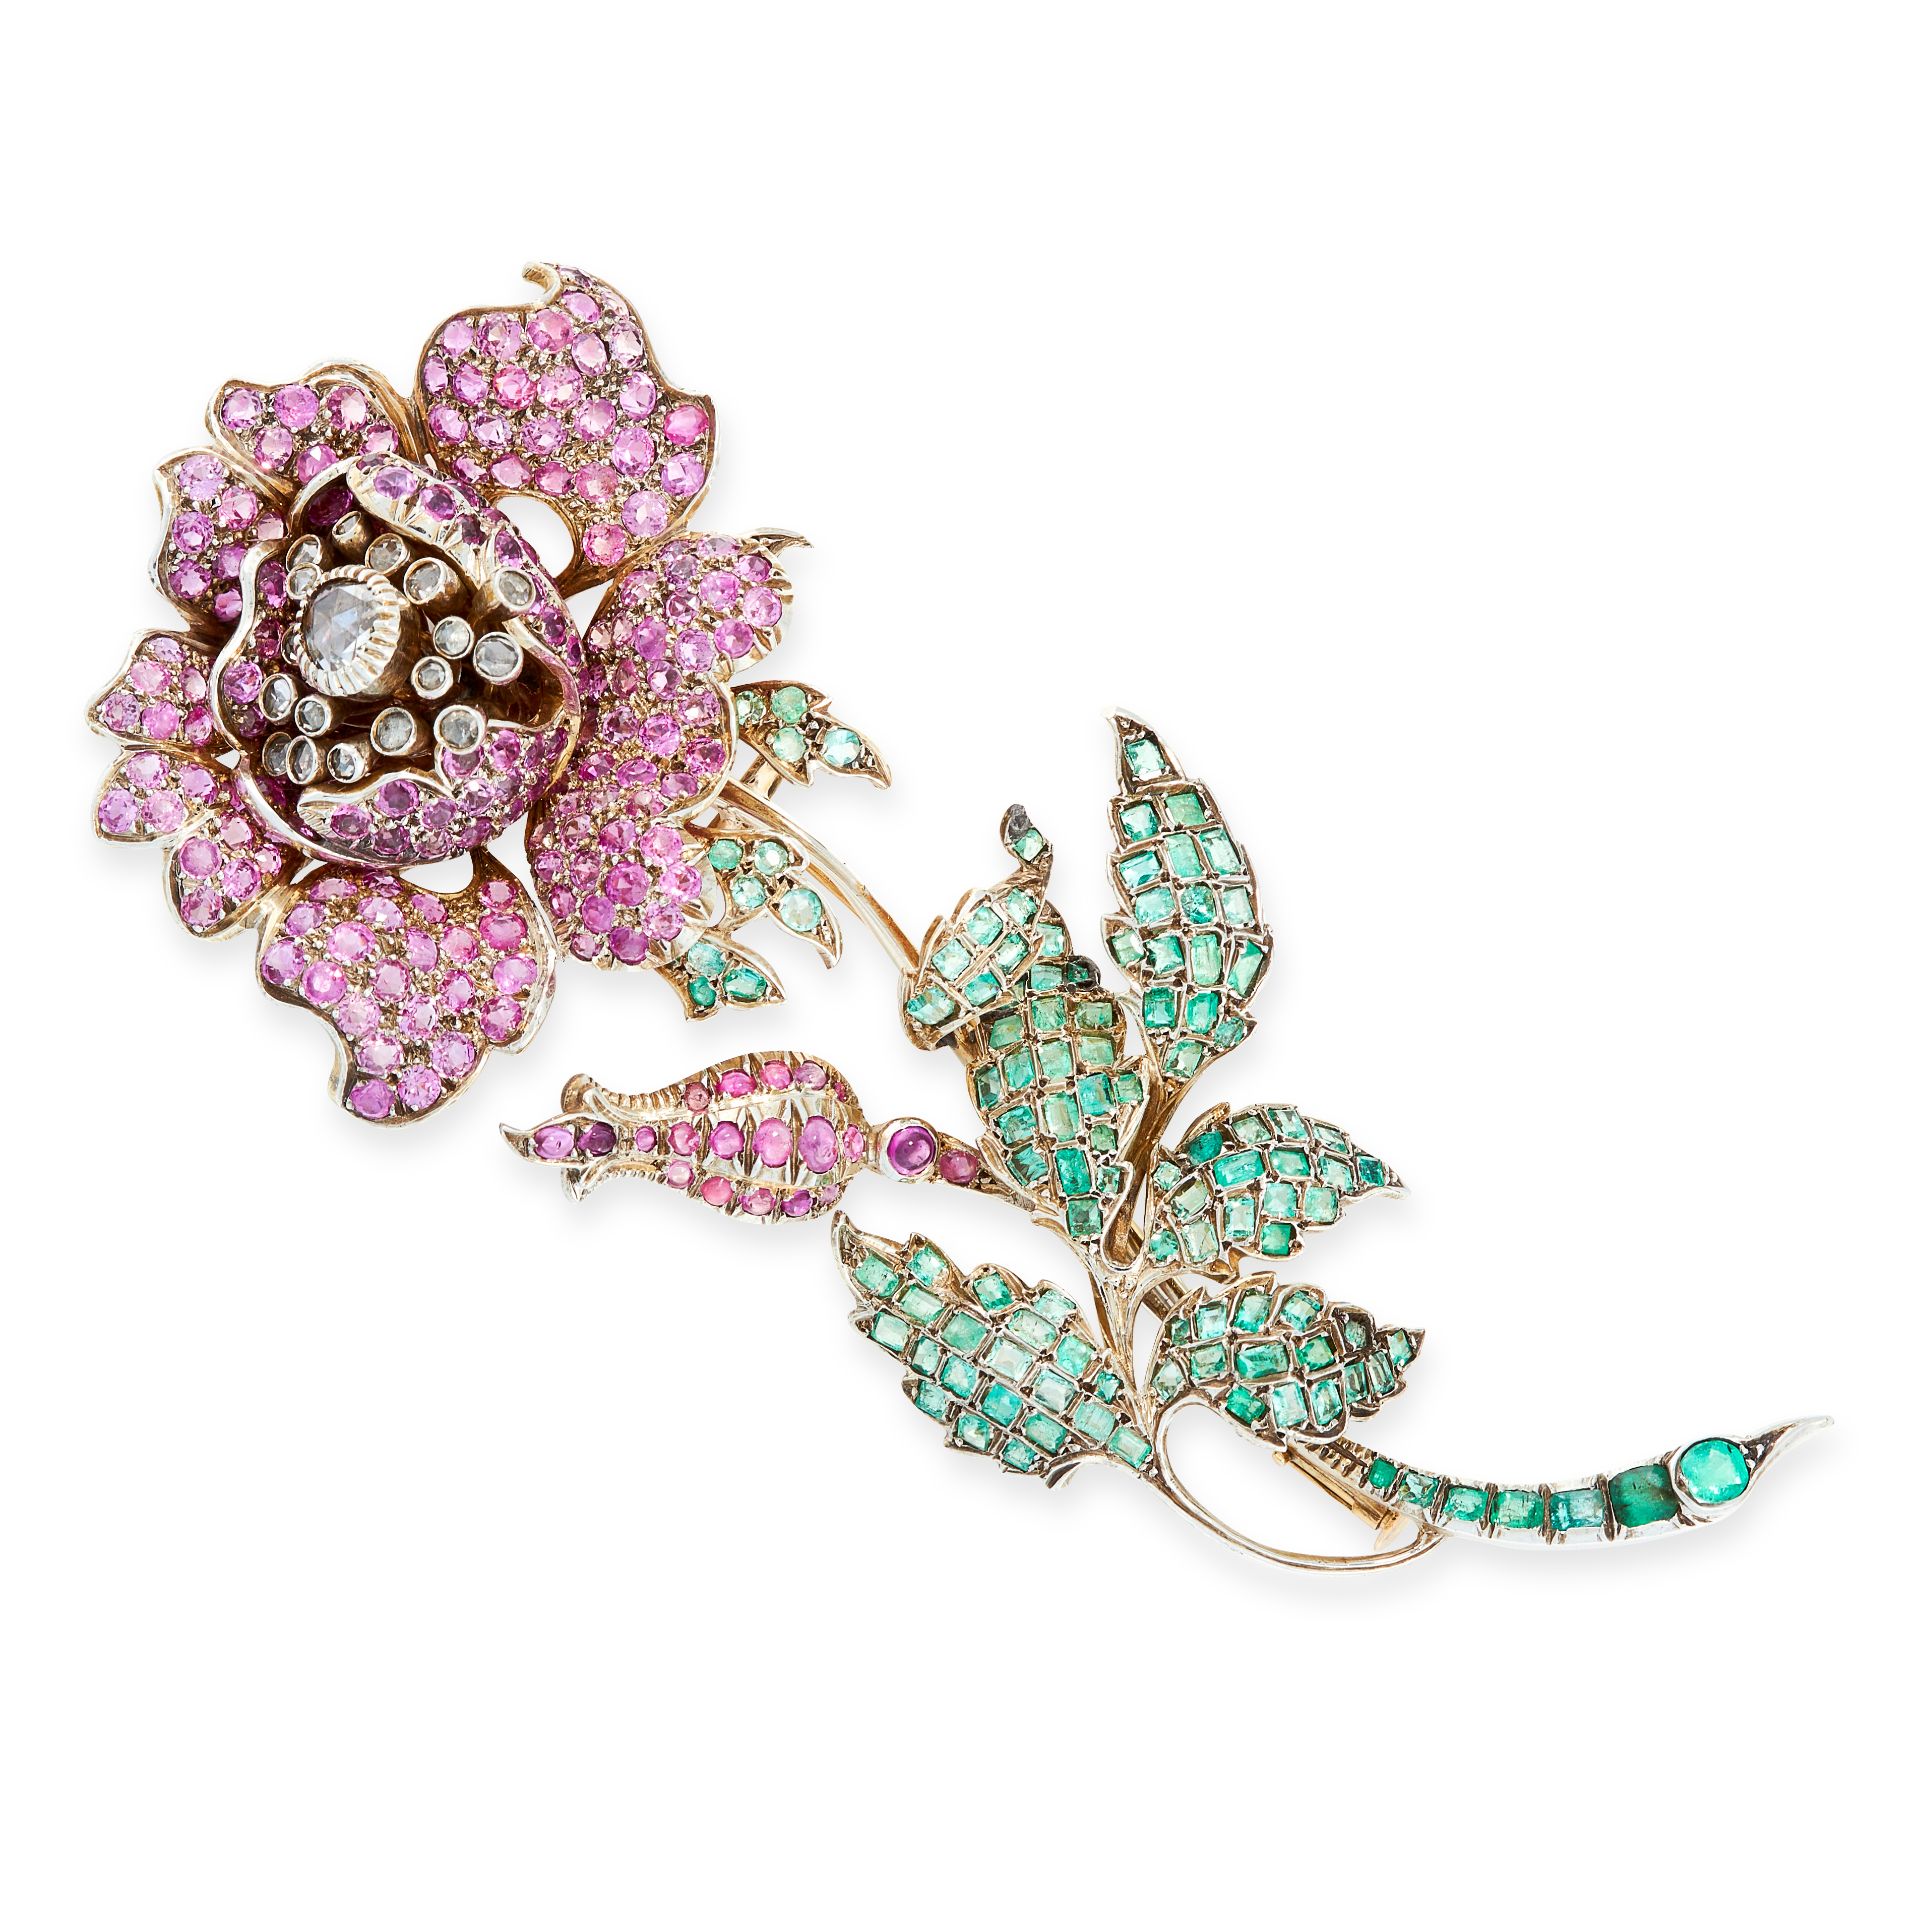 BURMA NO HEAT PINK SAPPHIRE, EMERALD AND DIAMOND BROOCH designed as a flower, the petals jewelled